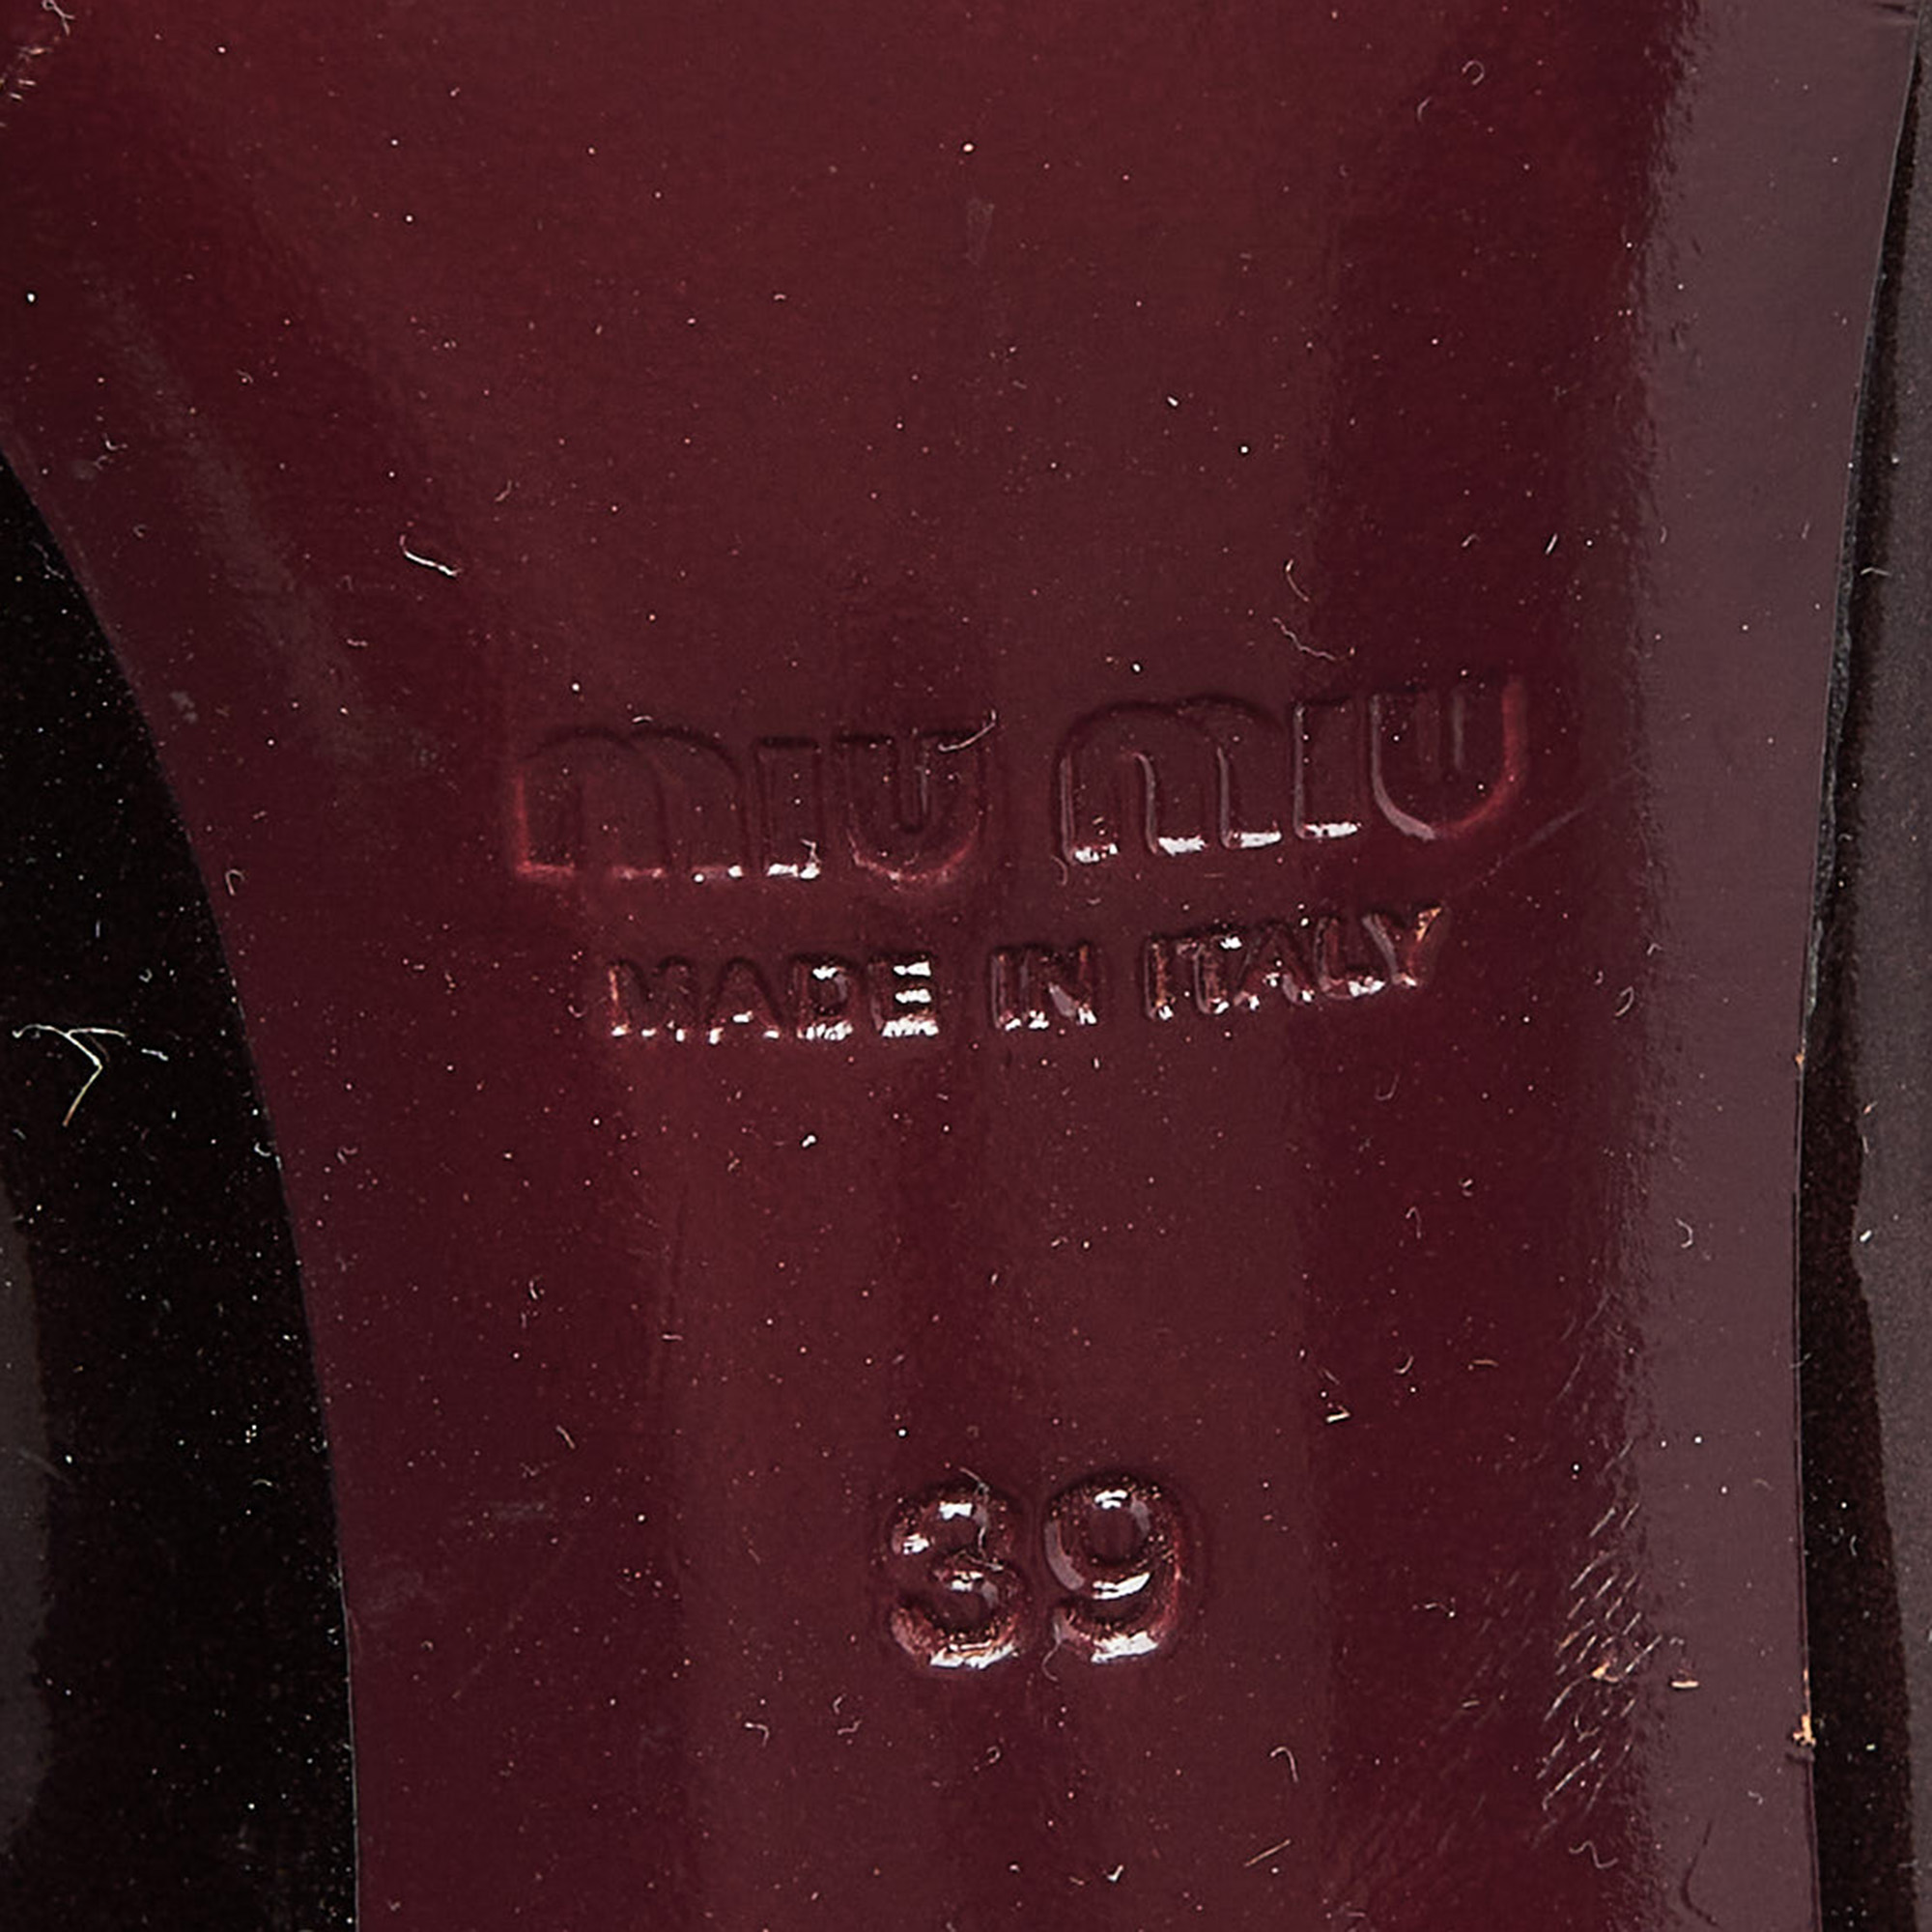 Miu Miu Burgundy Patent Leather Pointed Toe Pumps Size 39